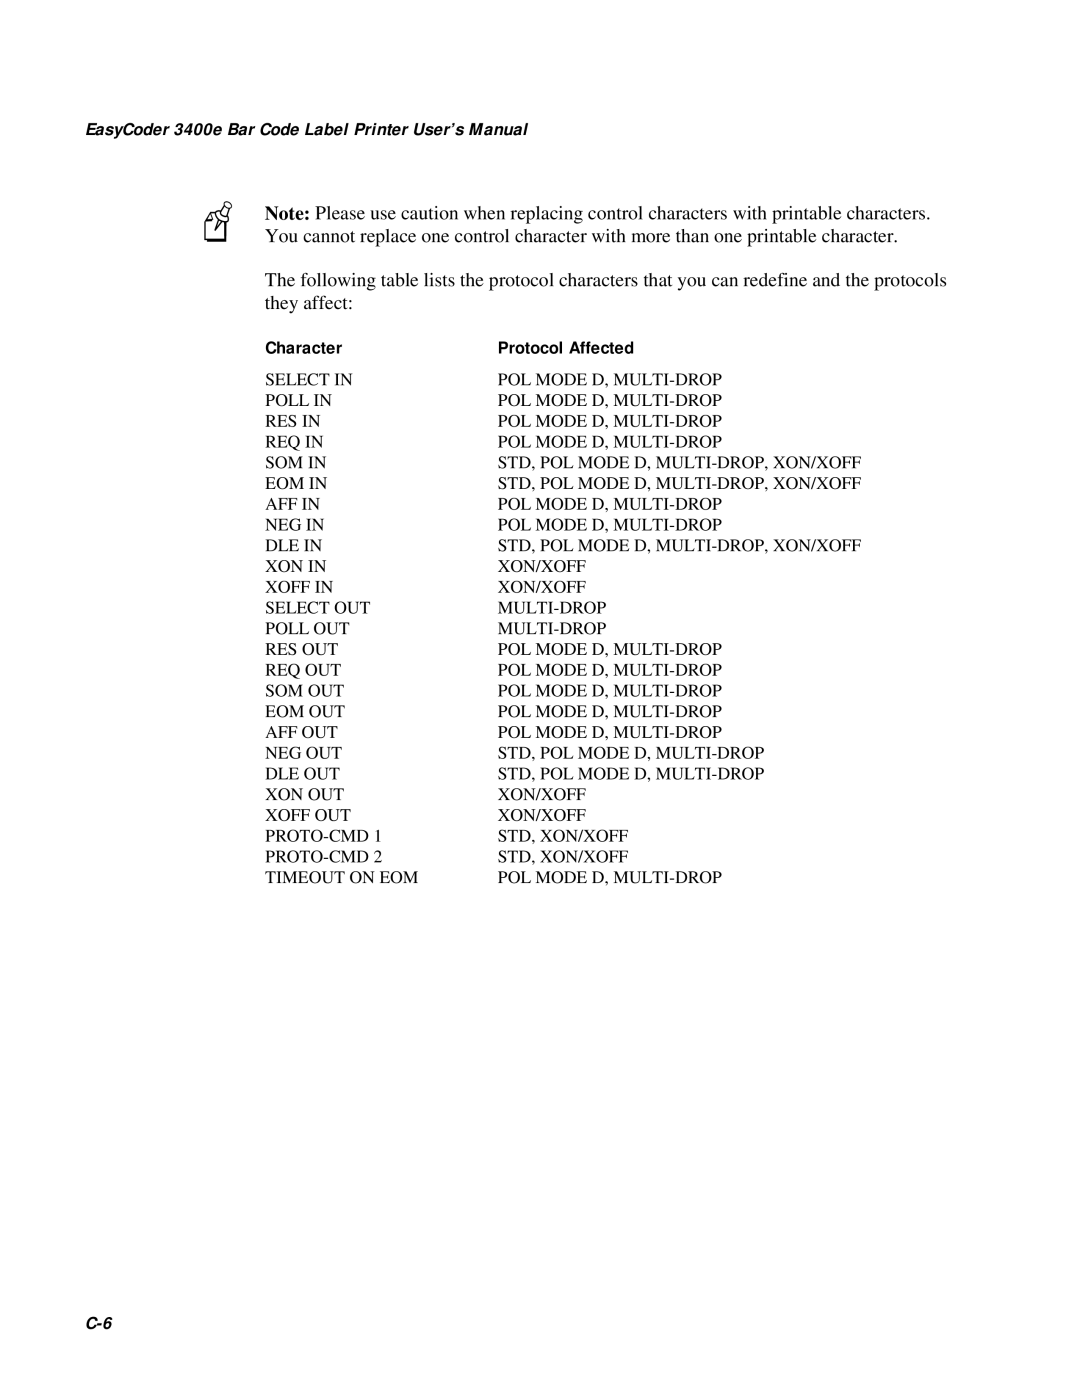 IBM user manual EasyCoder 3400e Bar Code Label Printer User’s Manual, Character, Protocol Affected 